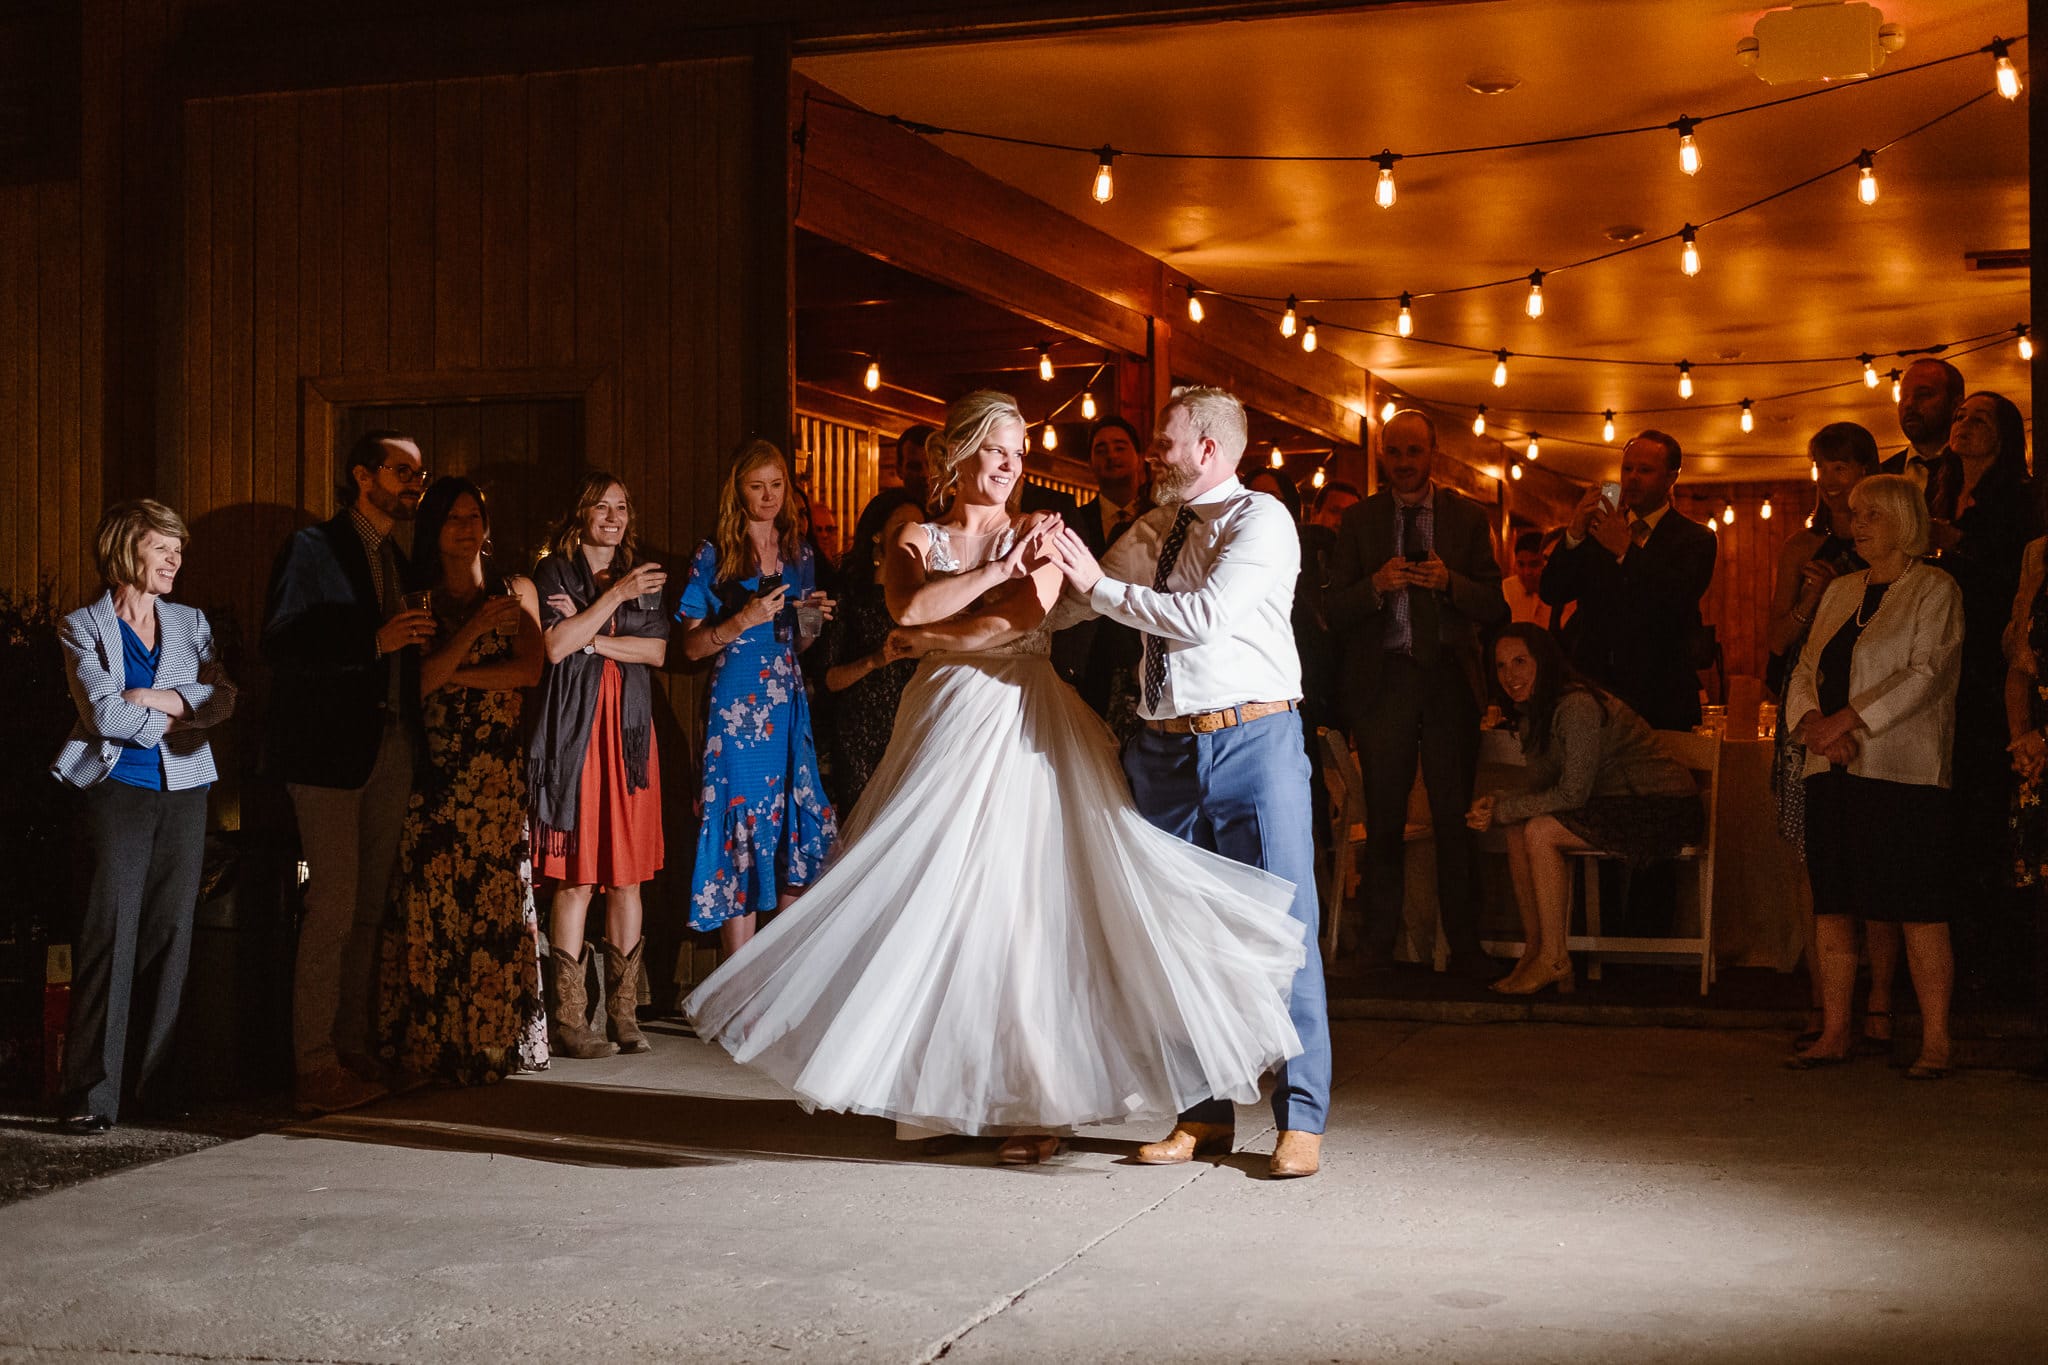 Steamboat Springs wedding photographer, La Joya Dulce wedding, Colorado ranch wedding venues, bride and groom first dance under market lights